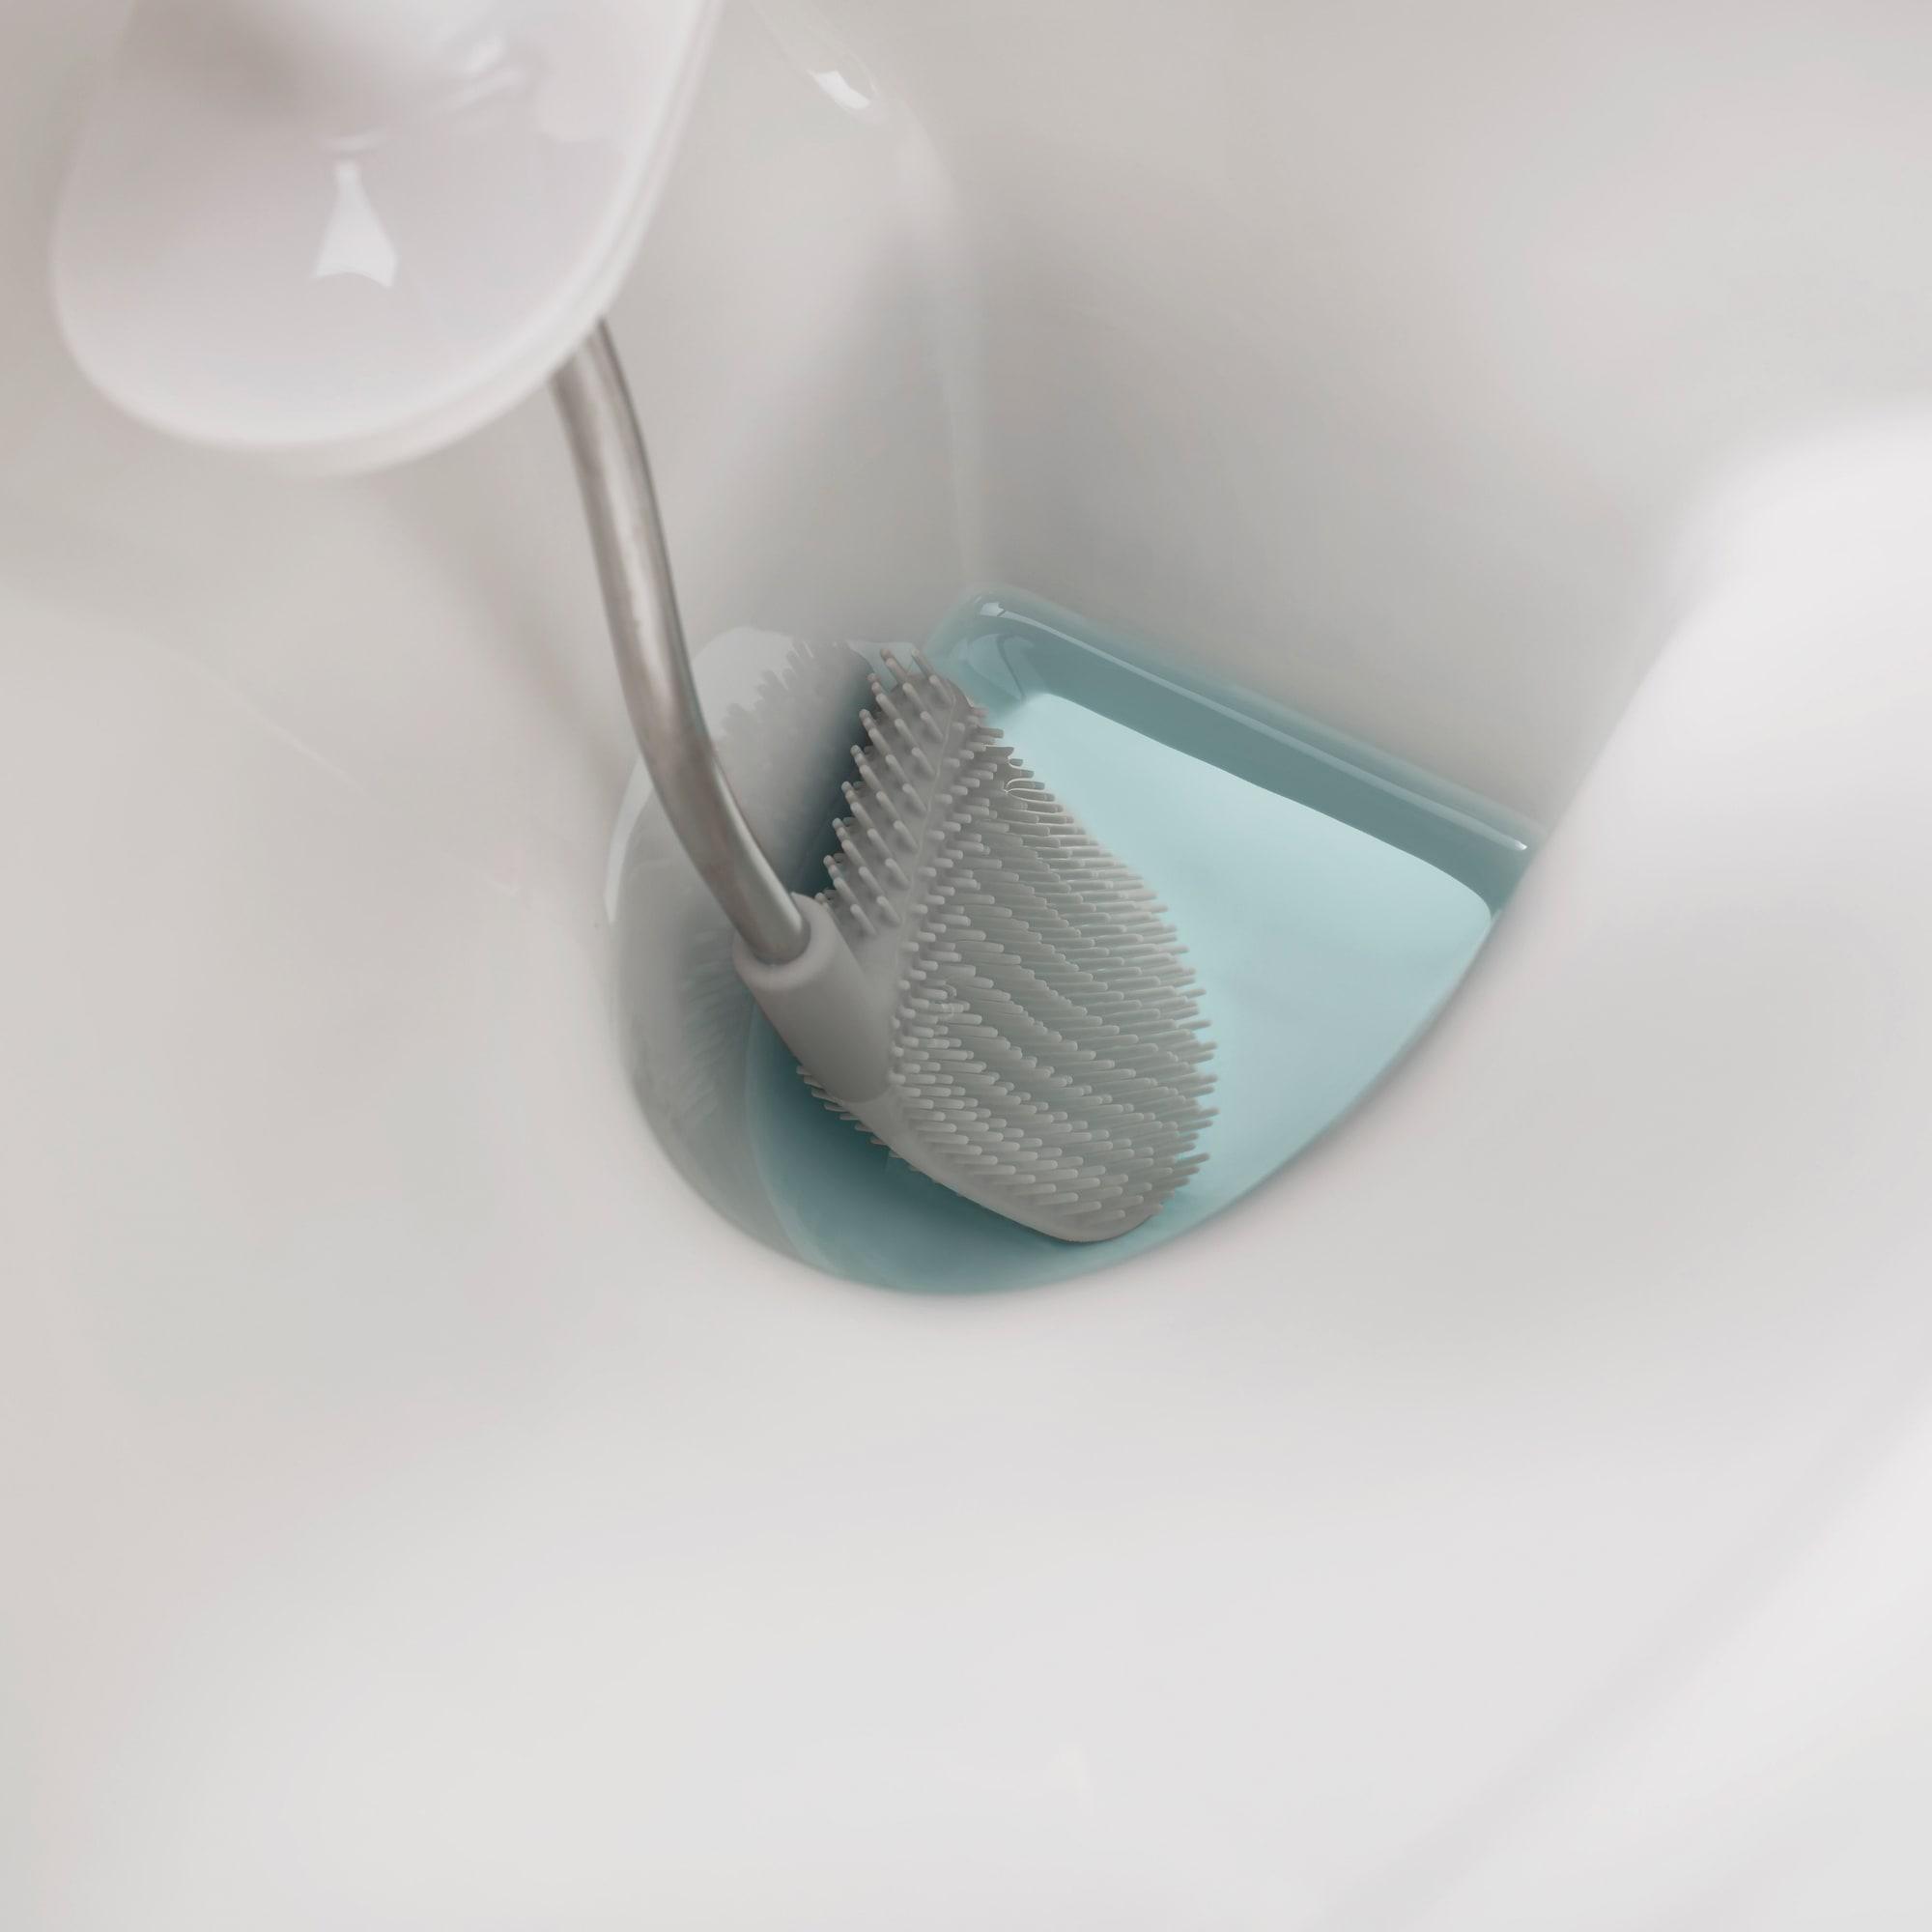 Joseph Joseph Flex Plus Toilet Brush with Storage Caddy Grey Image 5